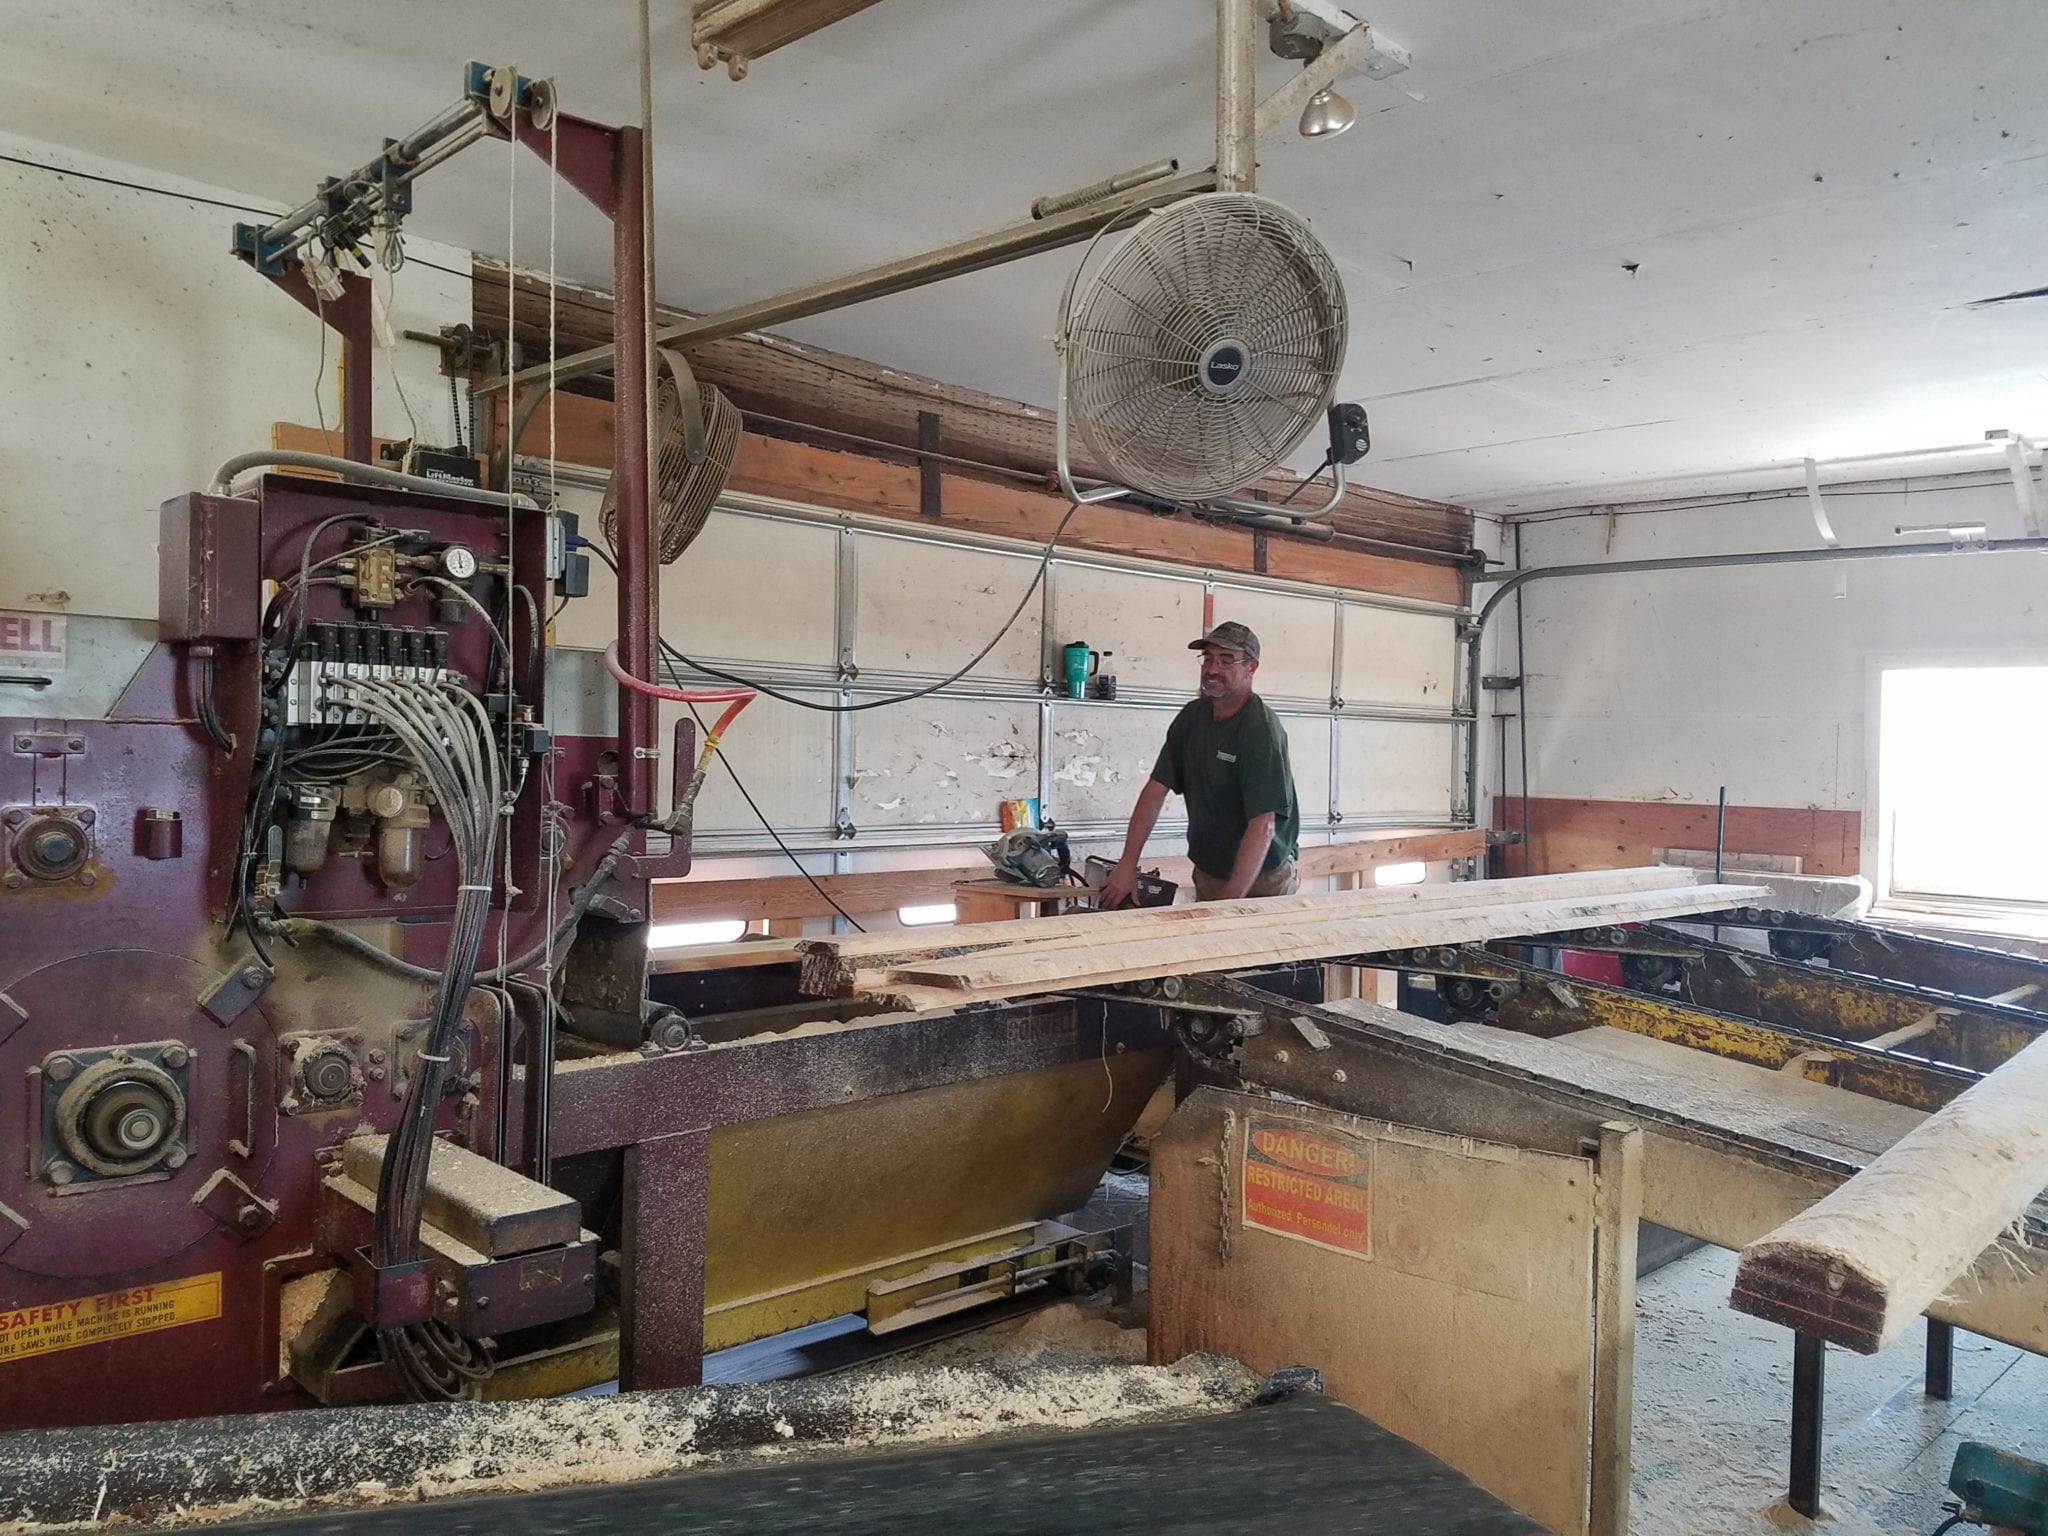 Sawmill Operator